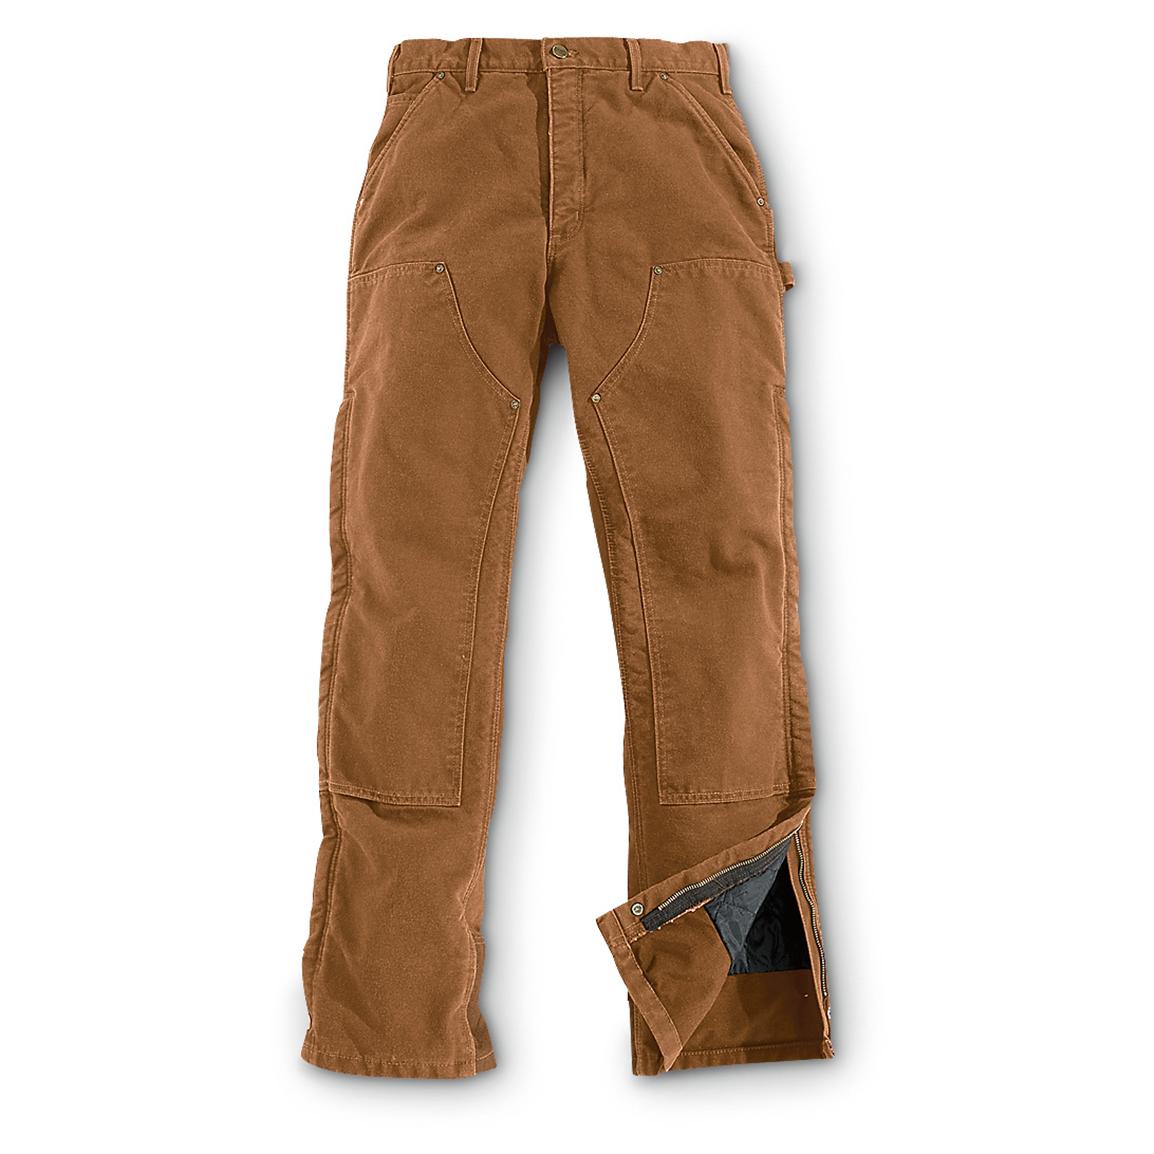 carhartt men's insulated pants